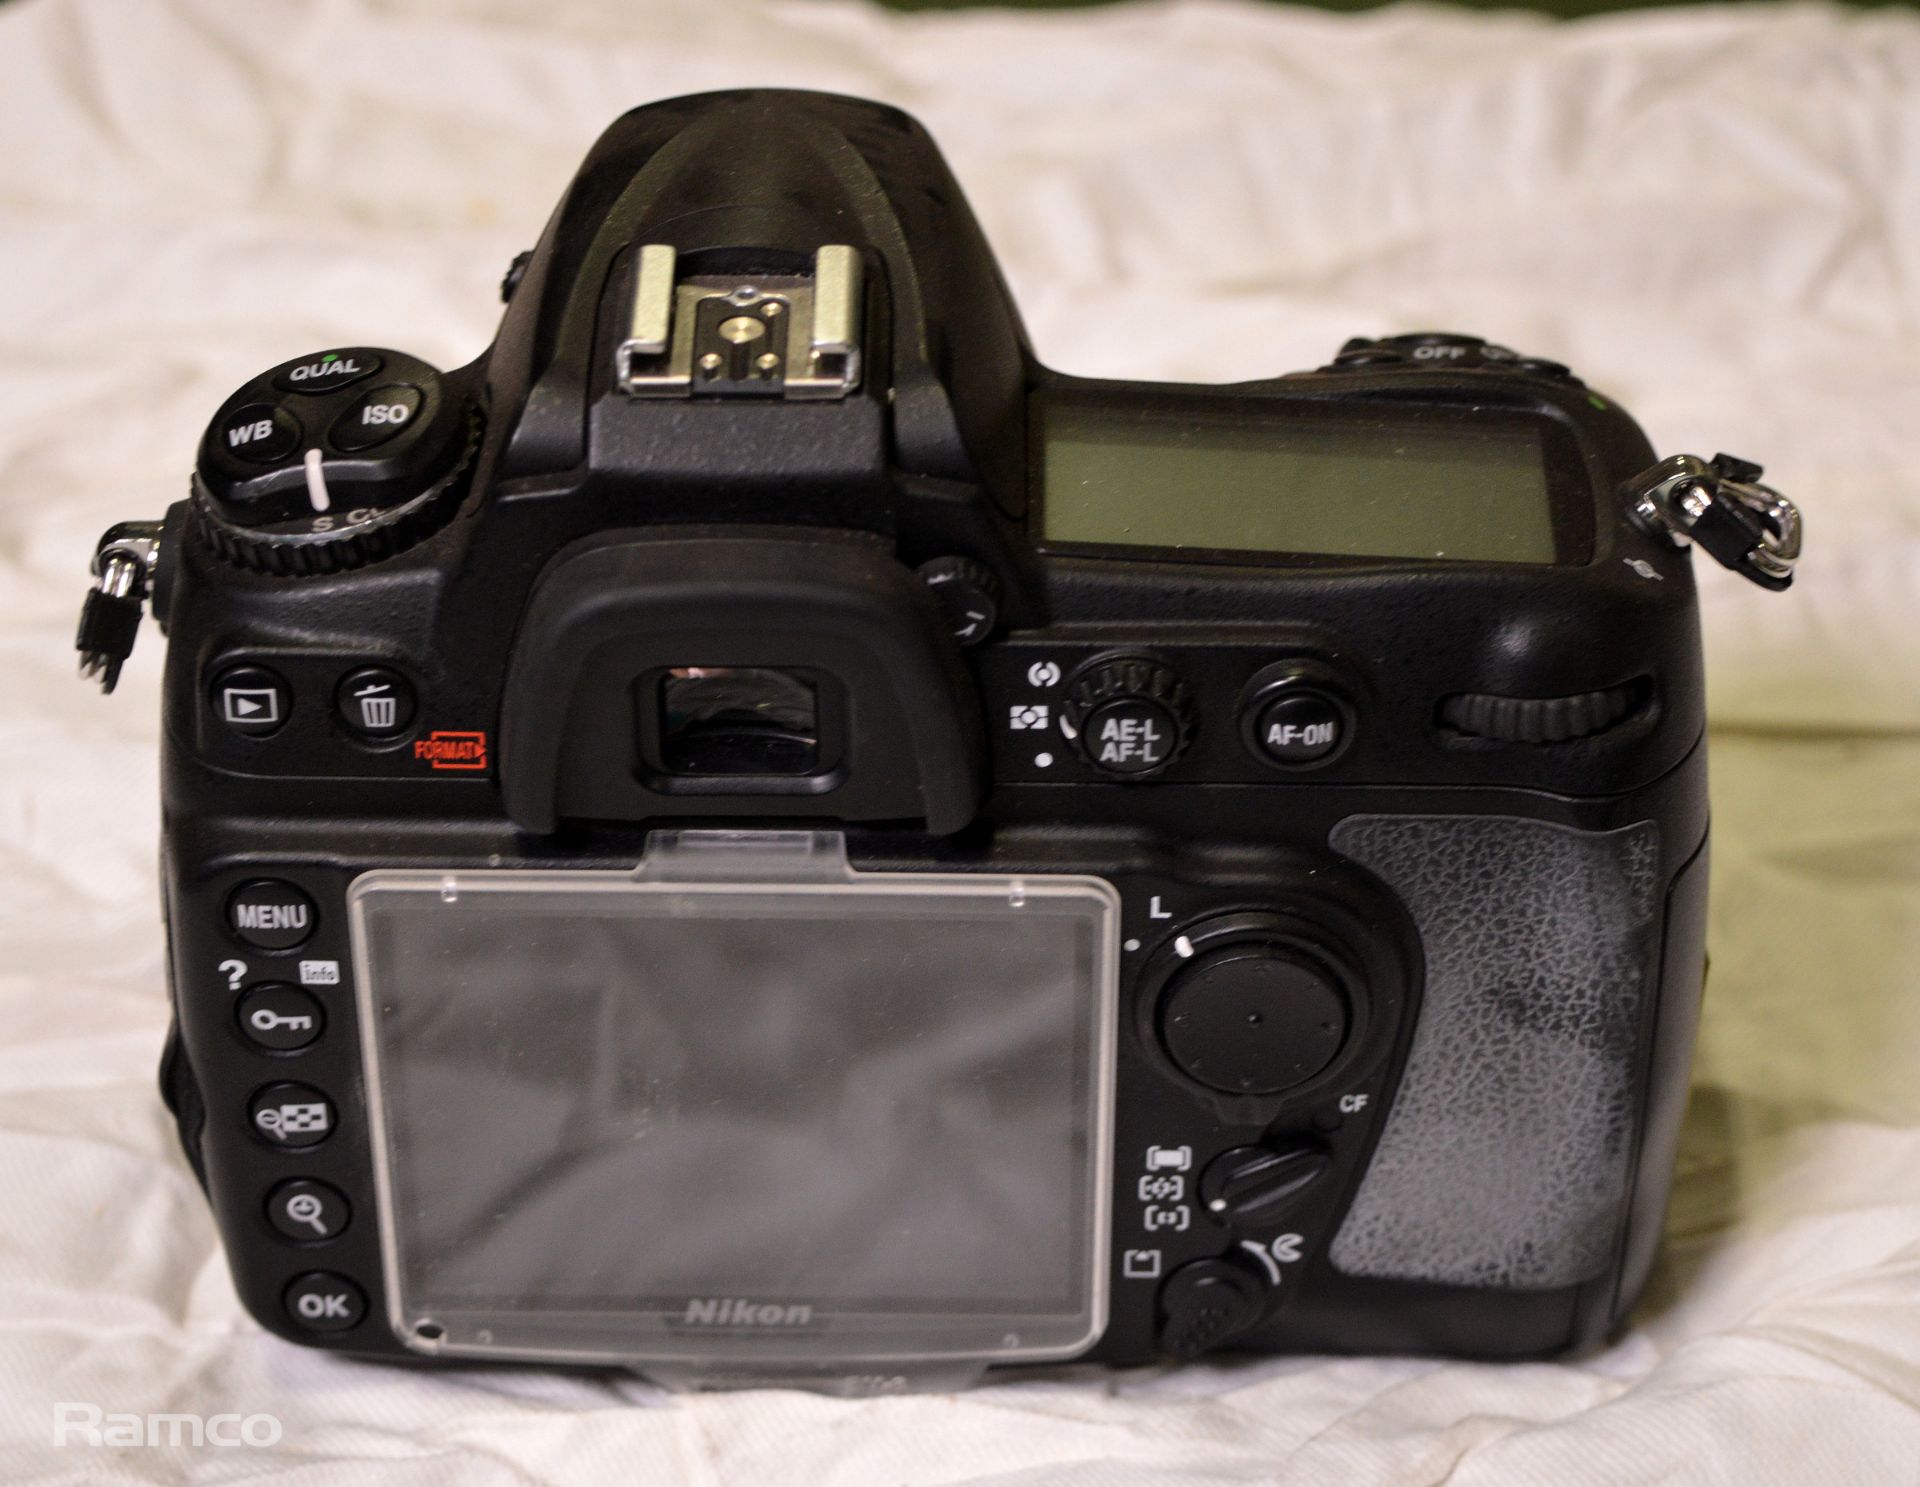 Nikon D300 SLR Digital Camera Body - Image 3 of 6